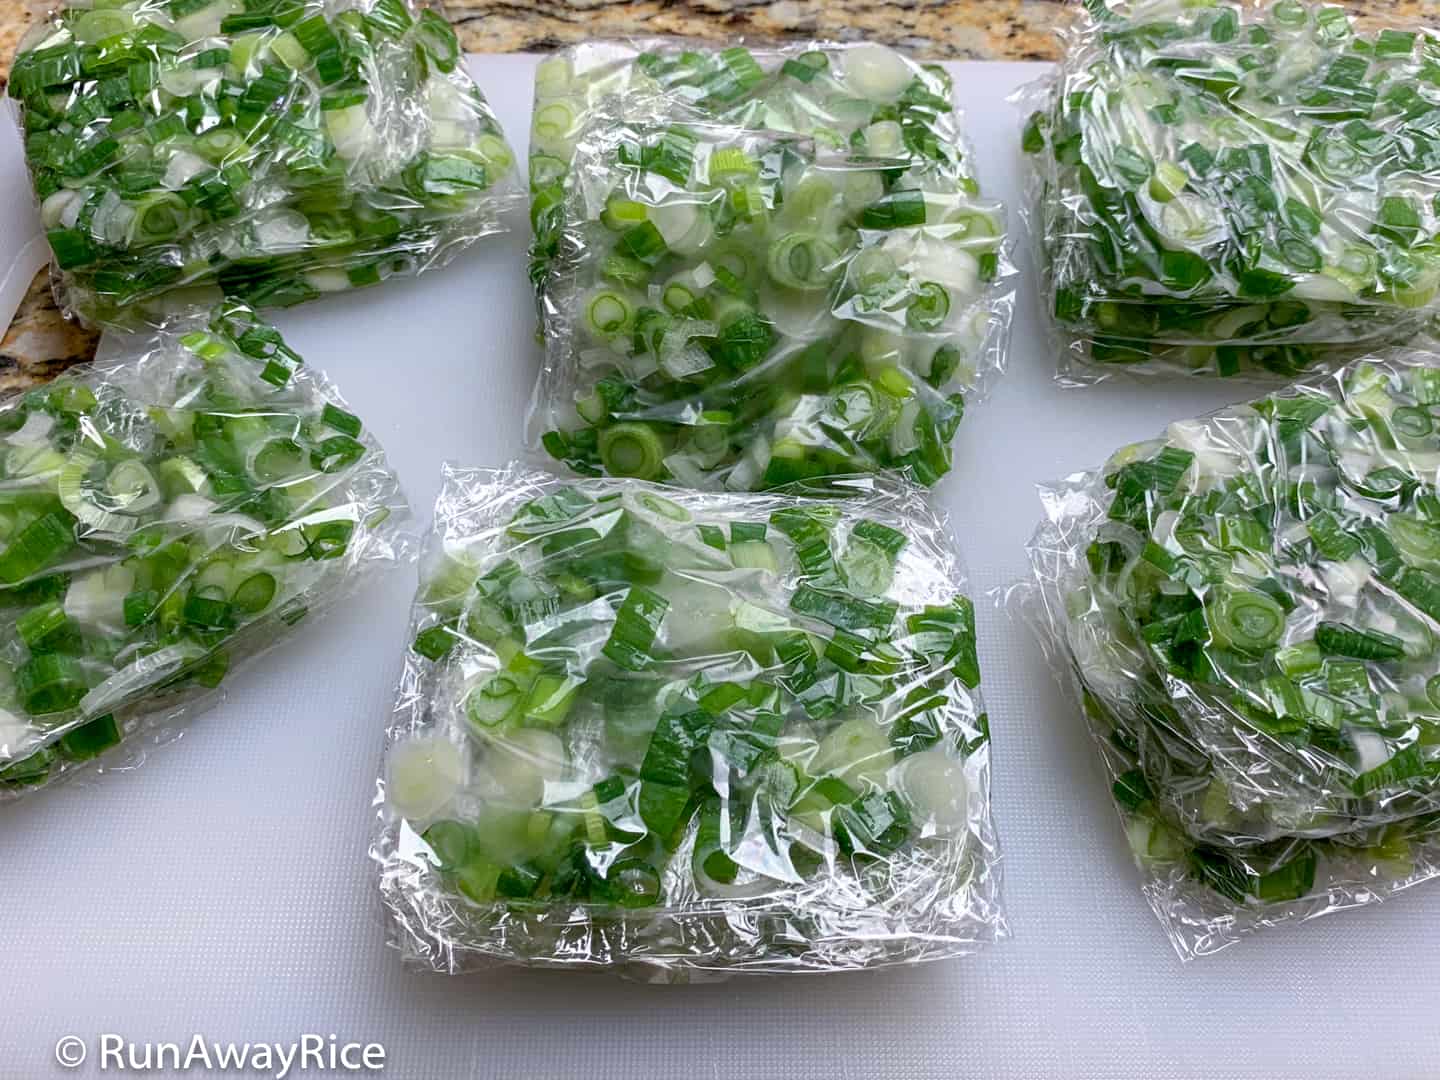 How to Freeze Green Onions / Scallions - RunAwayRice